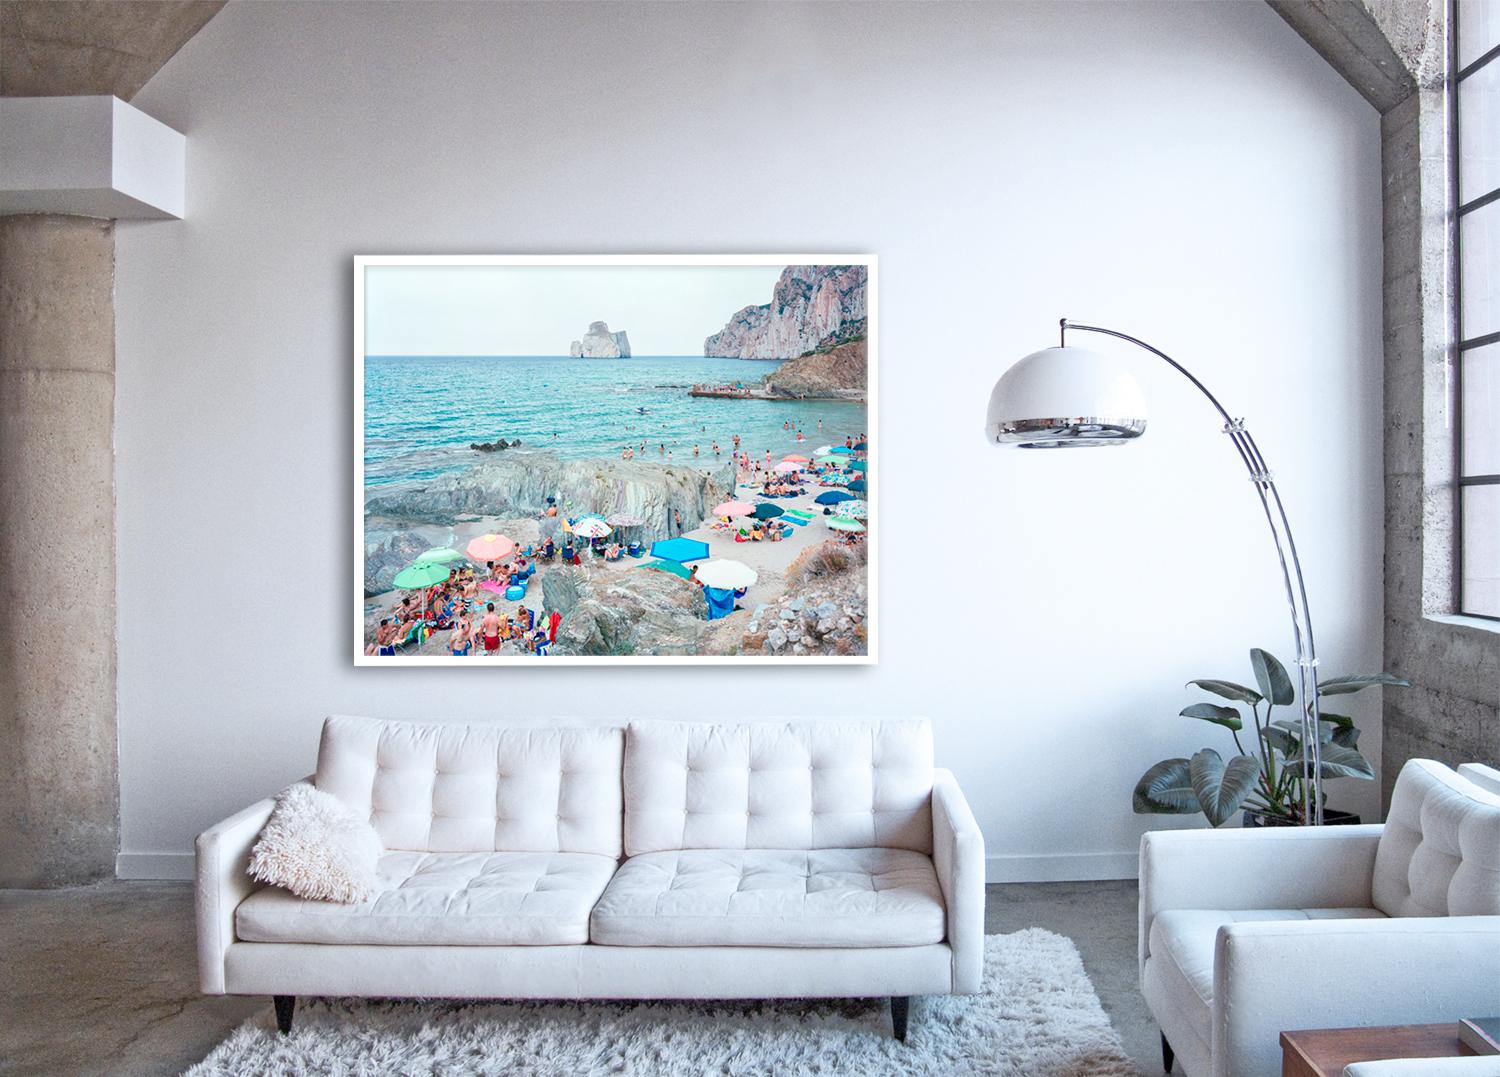 Pan di Zucchero - large scale photo of Mediterranean beach scene (framed)  - Photograph by Massimo Vitali